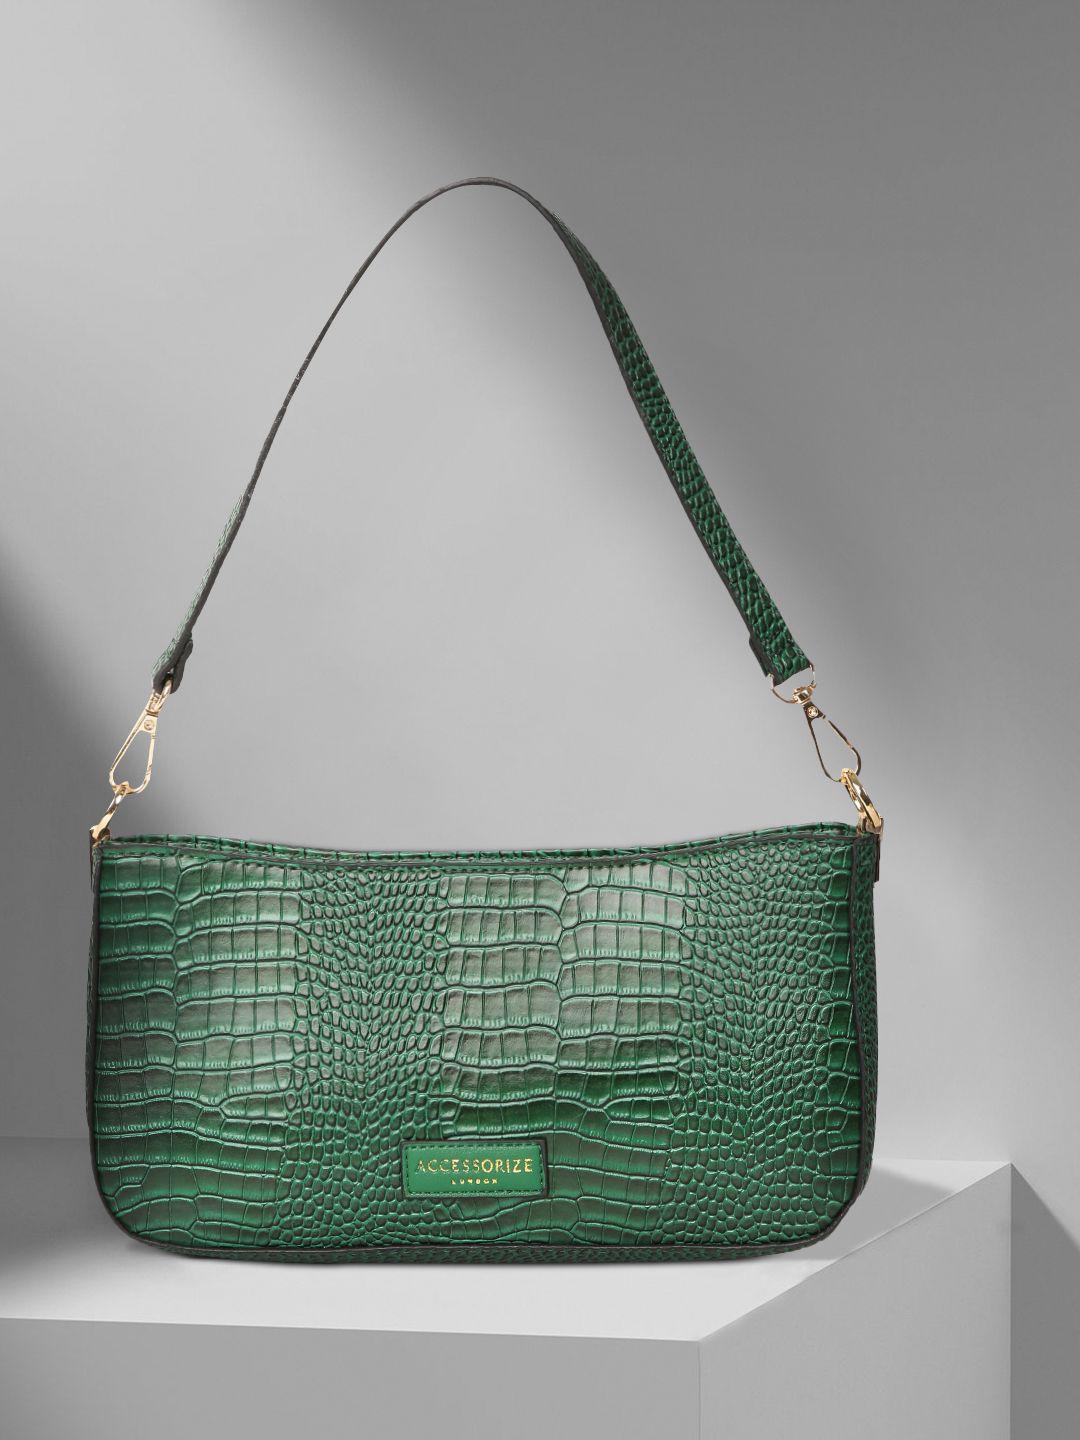 accessorize green animal textured structured shoulder bag